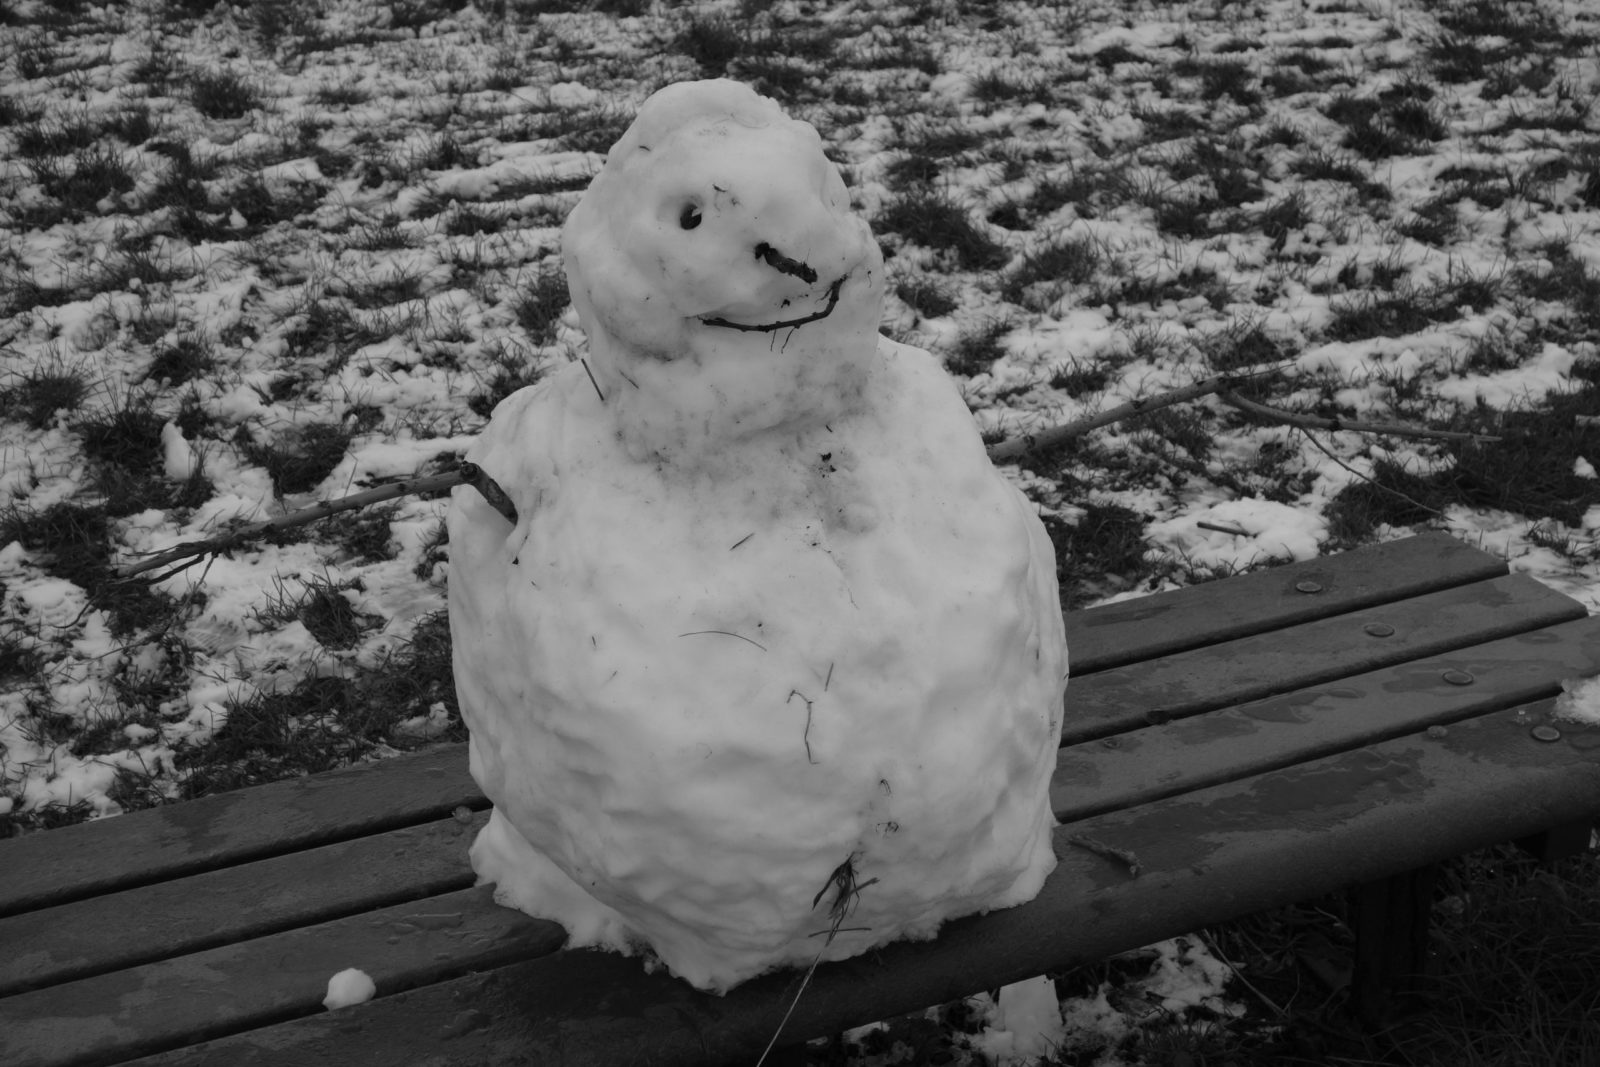 Frozen Snowman on a bench in Warwickshire, England